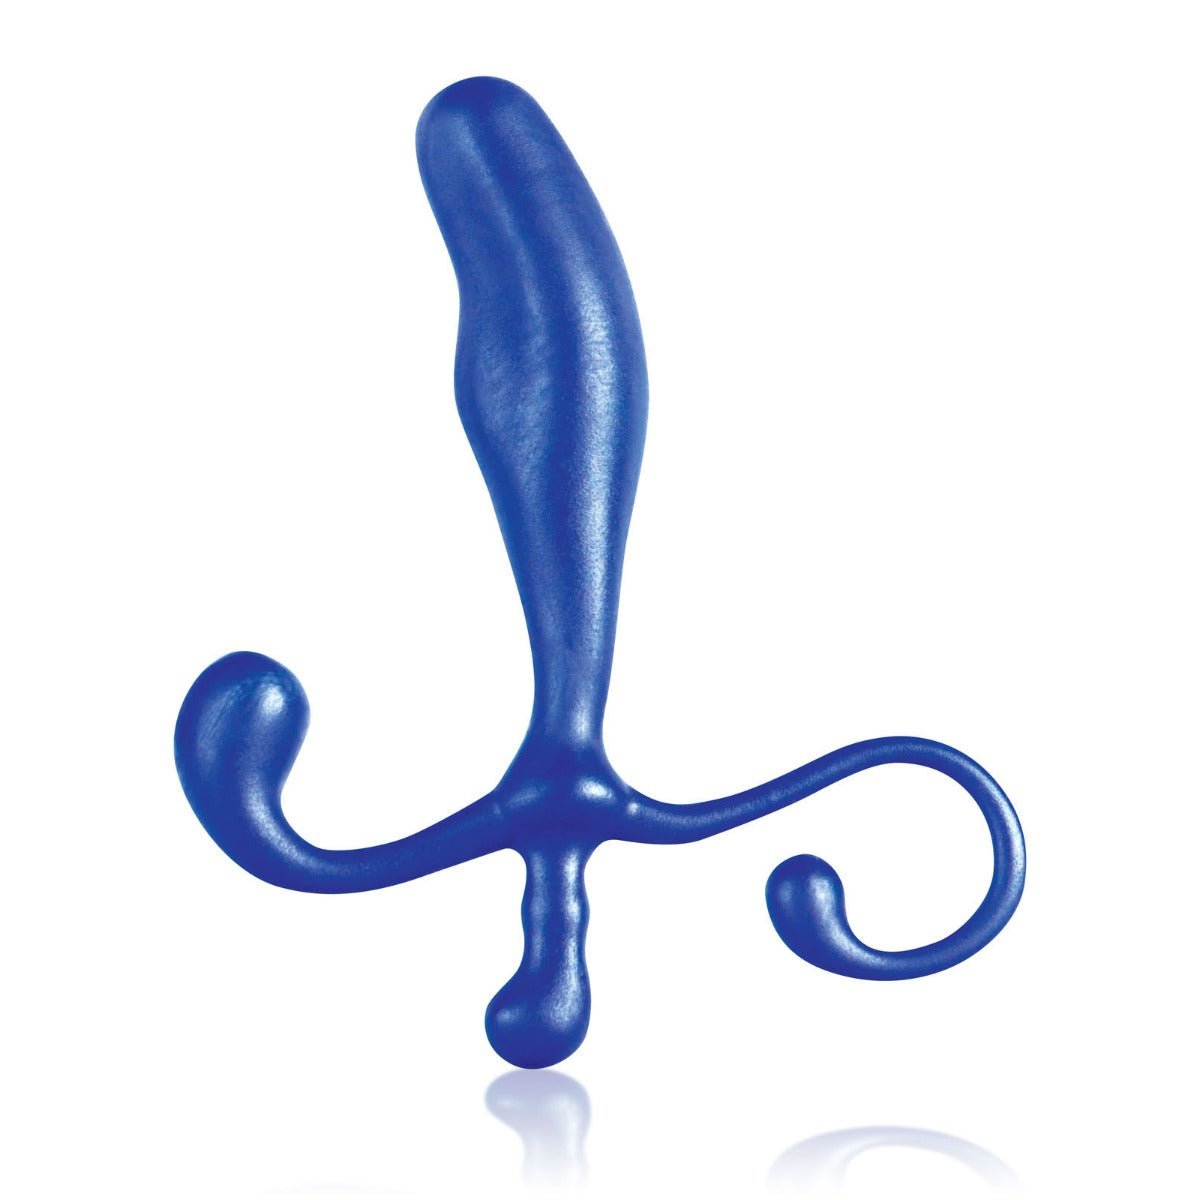 Prostate Massagers 5"" MALE P-SPOT MASSAGER - BLUE""   